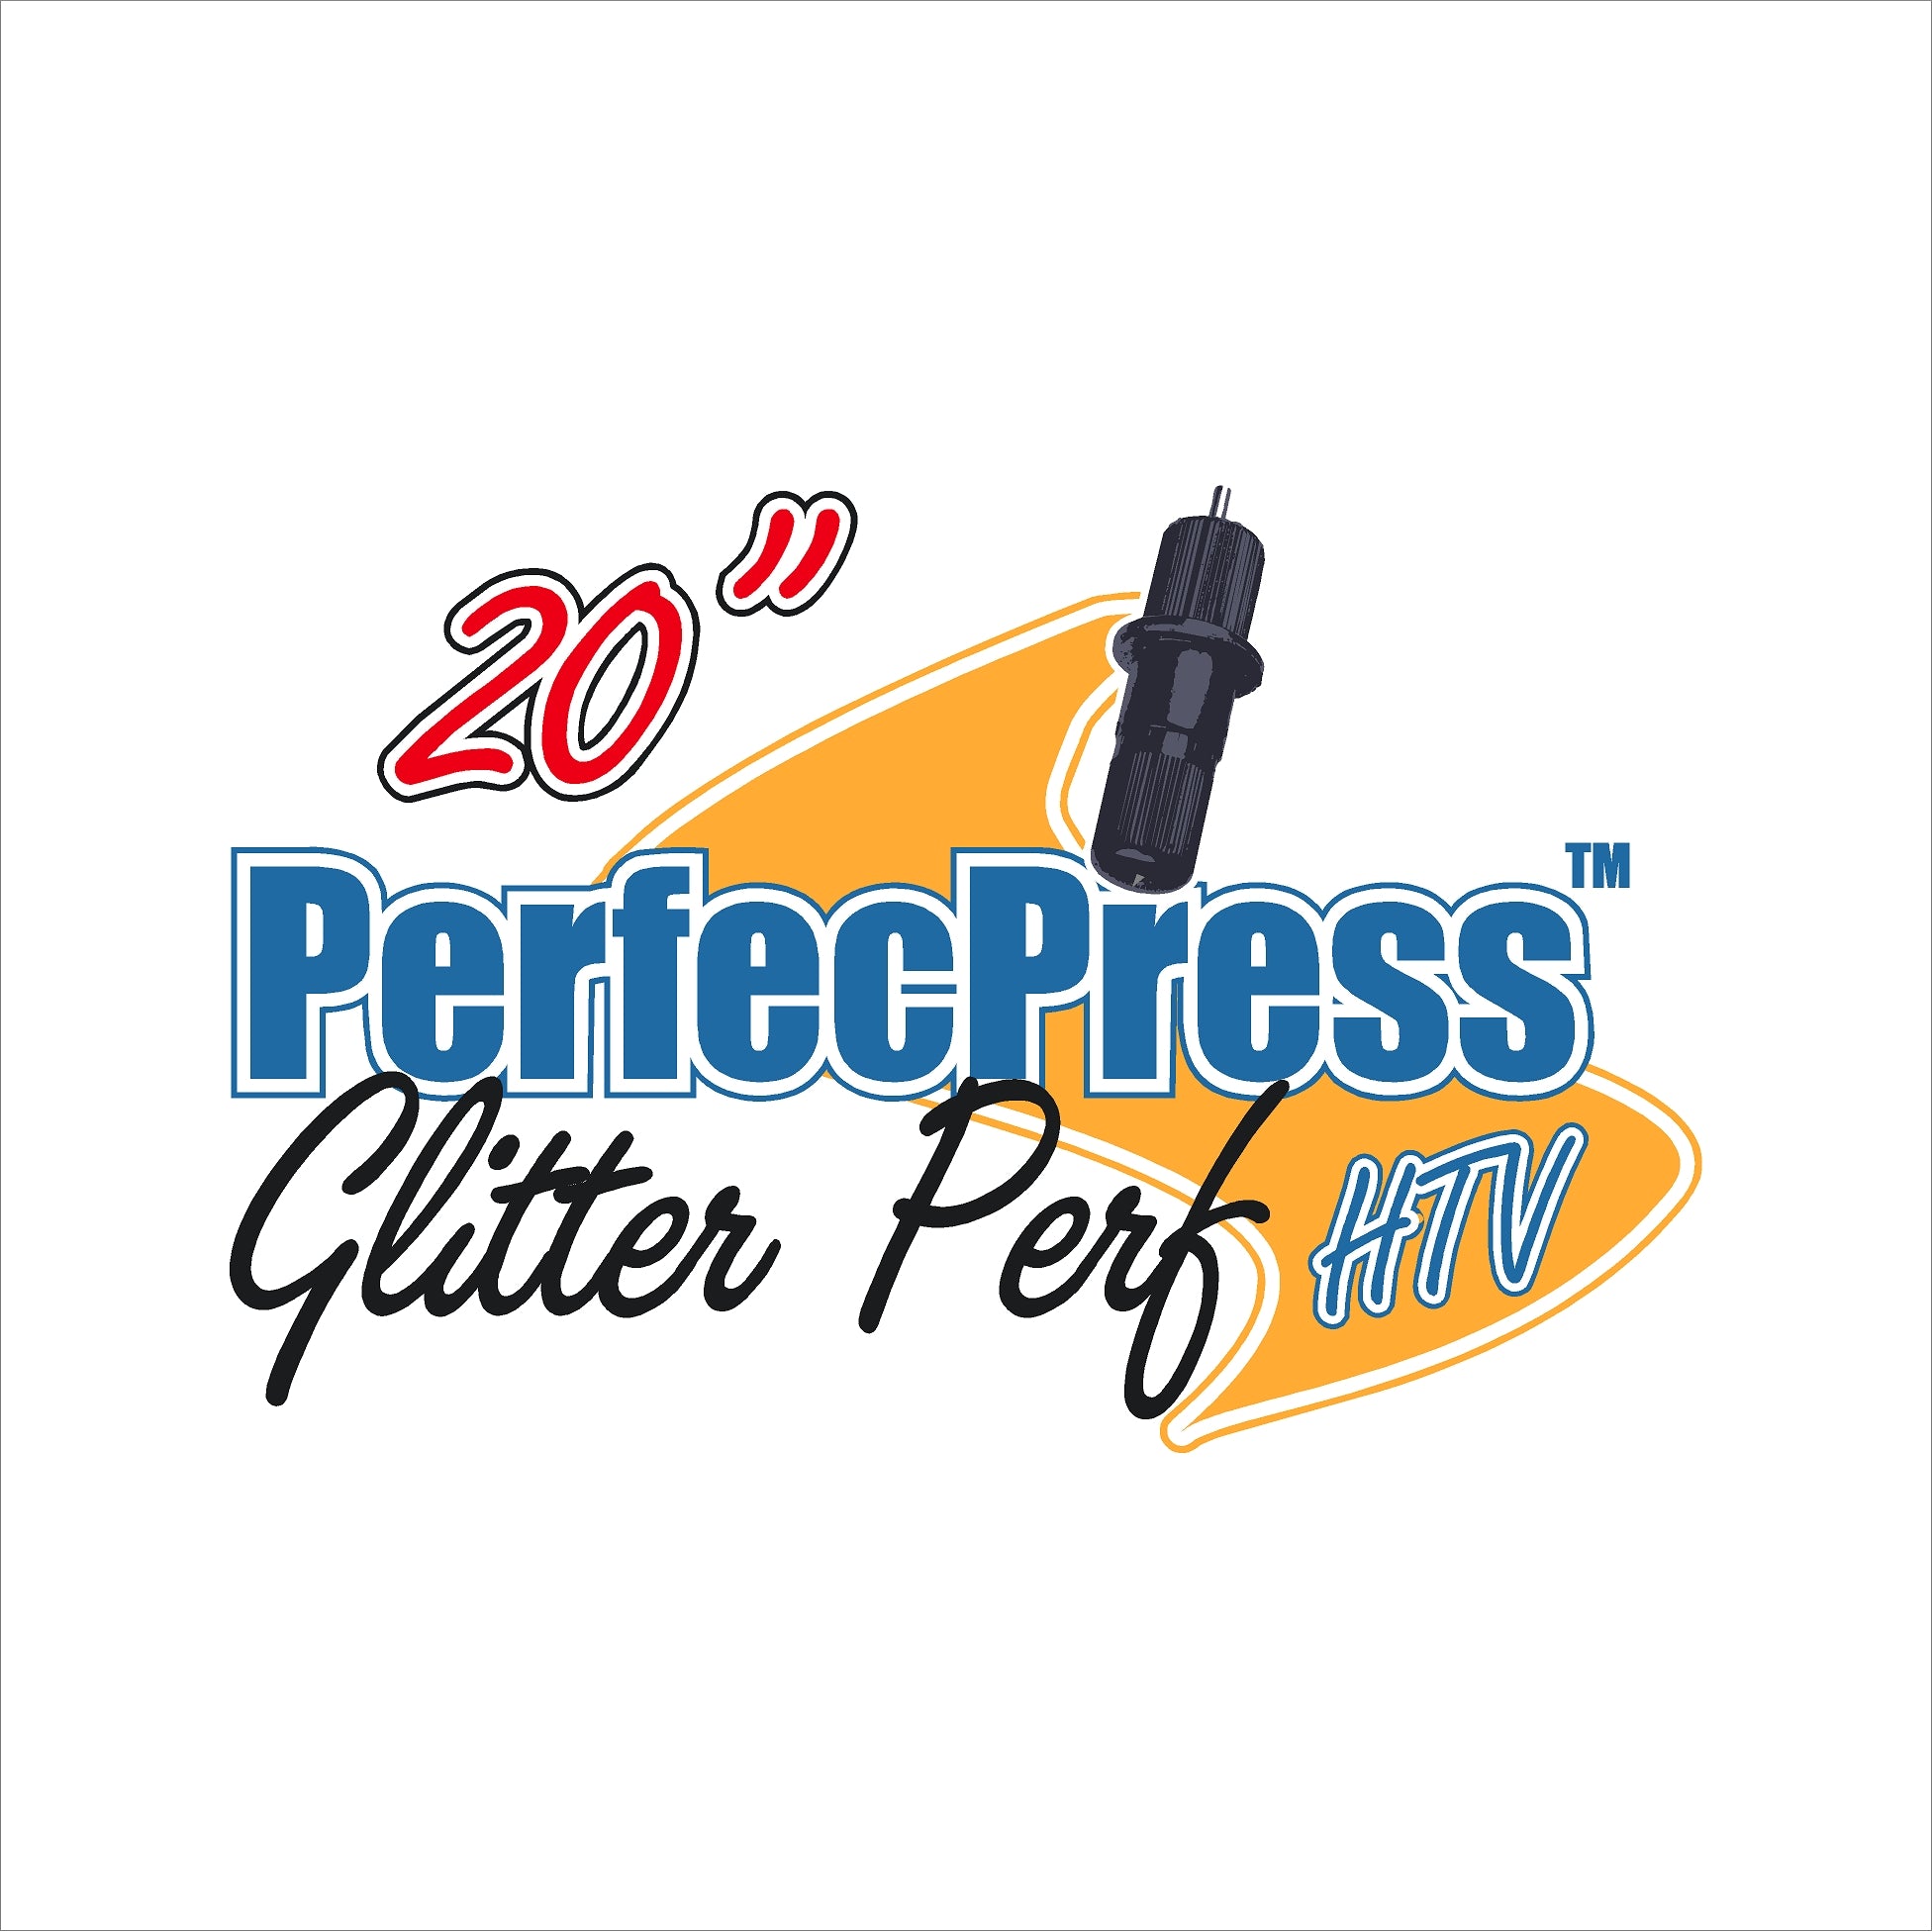 CLEARANCE Printed Clear Vinyl (12 gauge) - Iridescent Mini Glitter